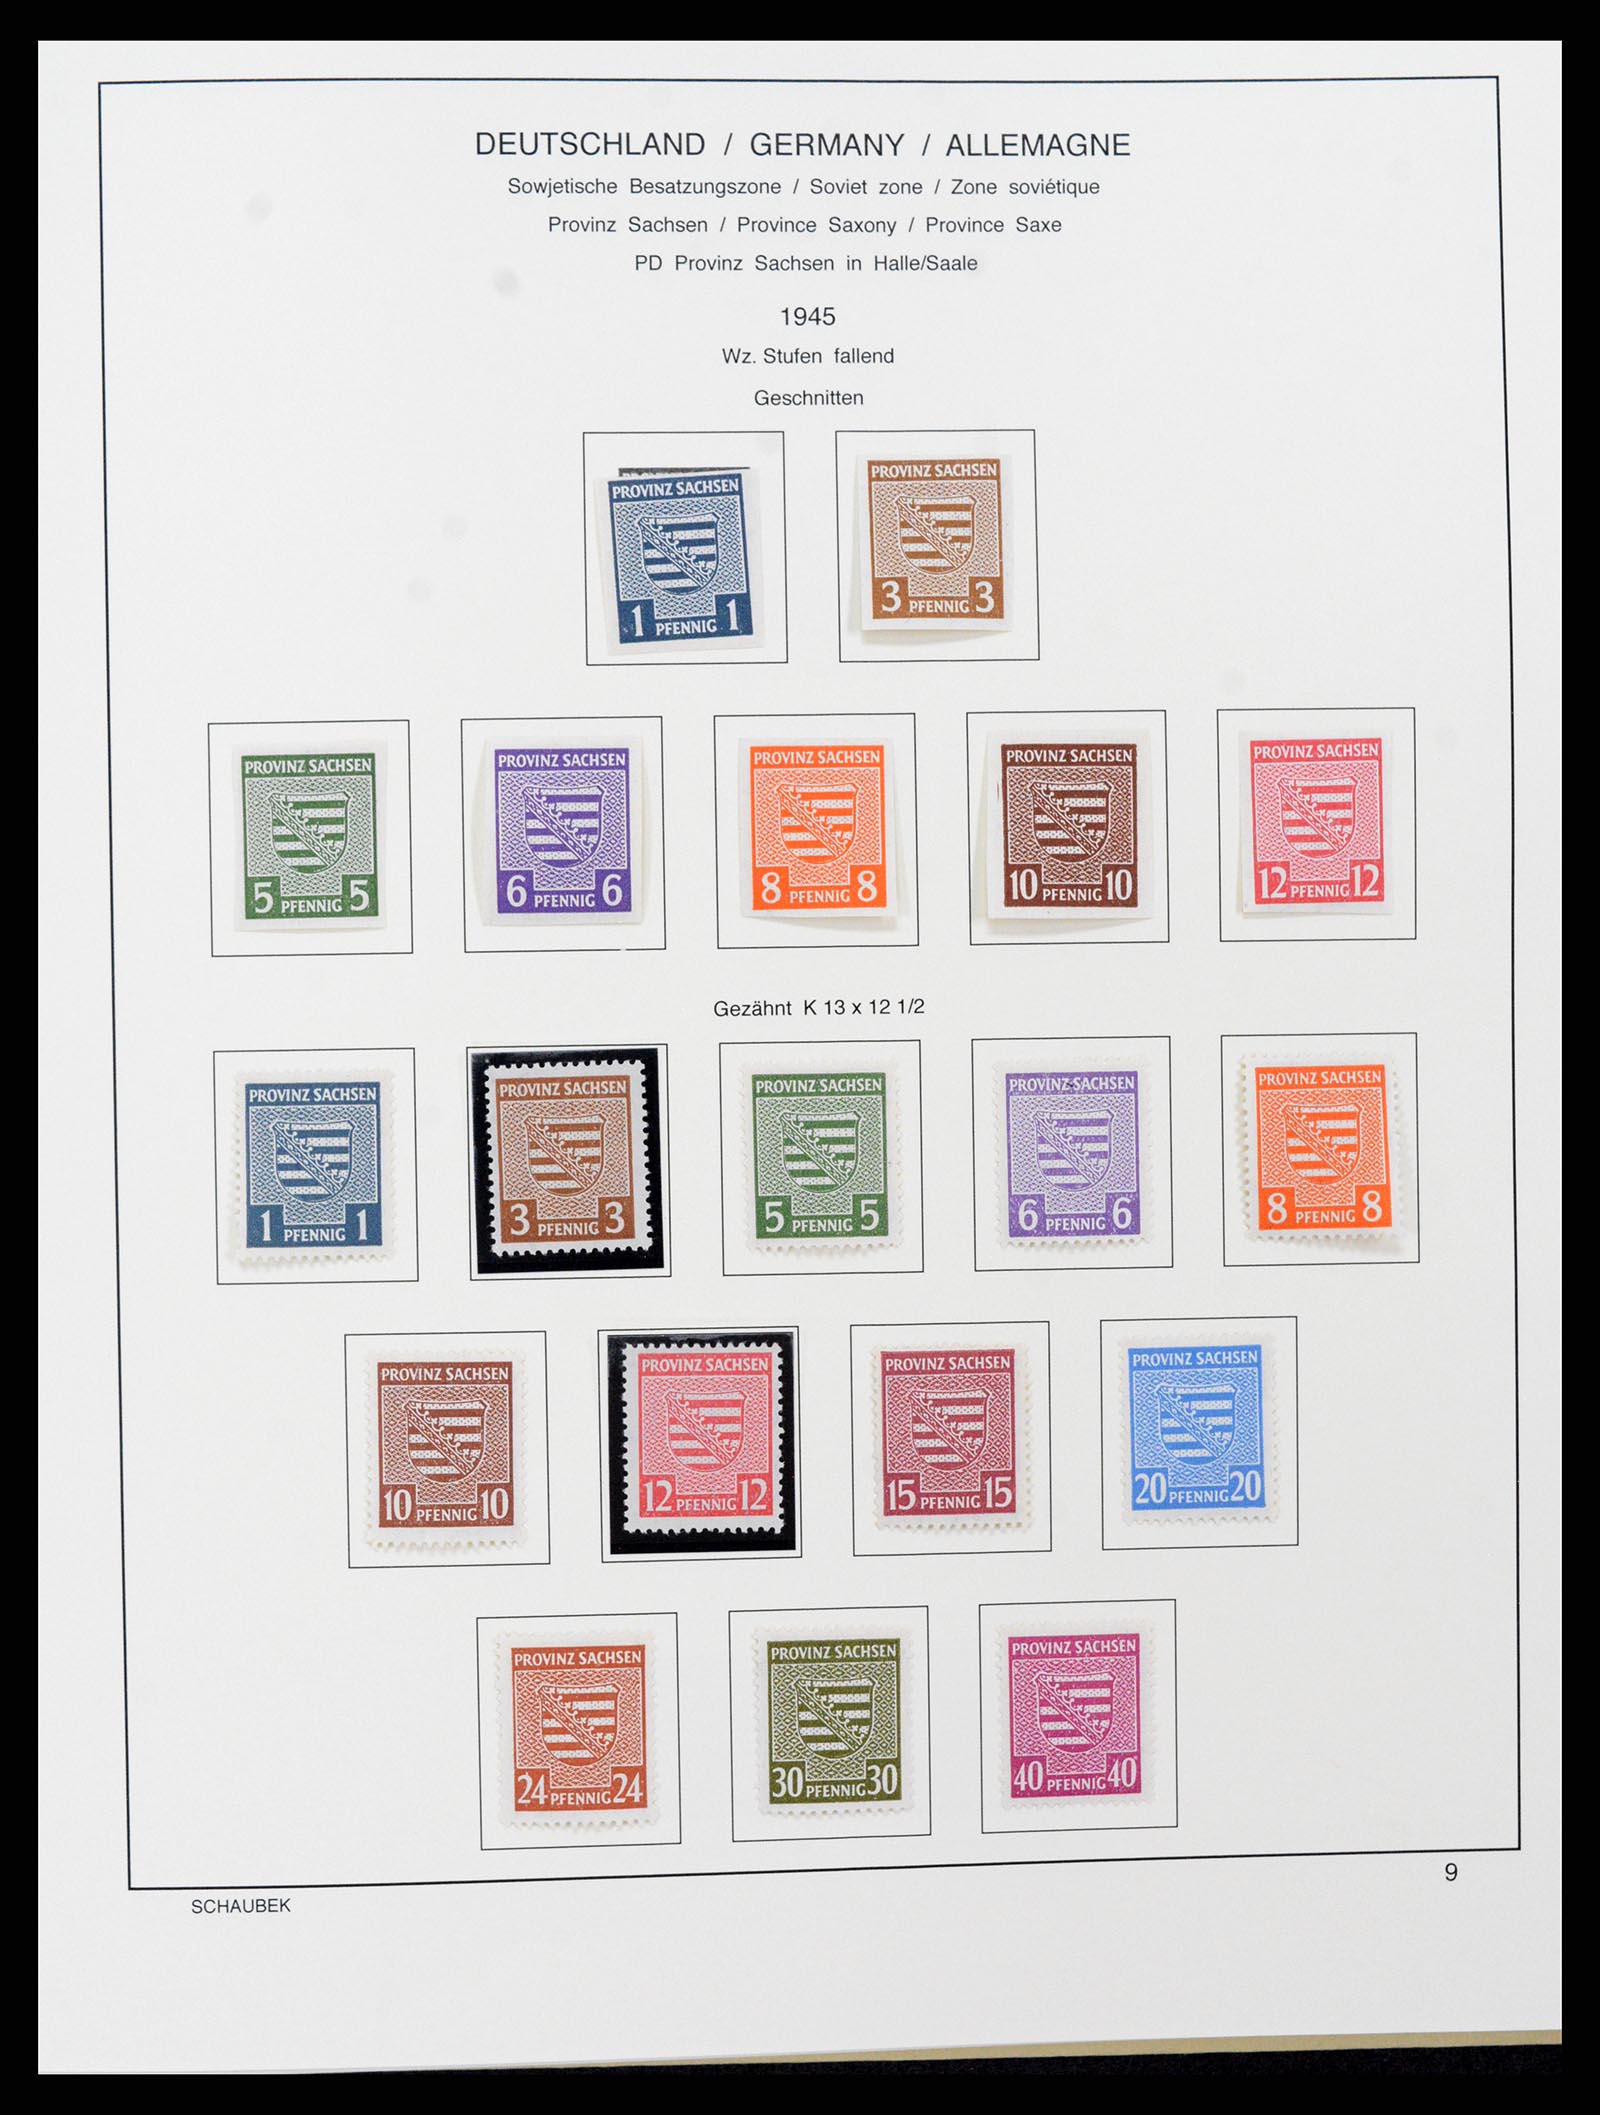 37645 027 - Stamp collection 37645 German Zones 1945-1949.